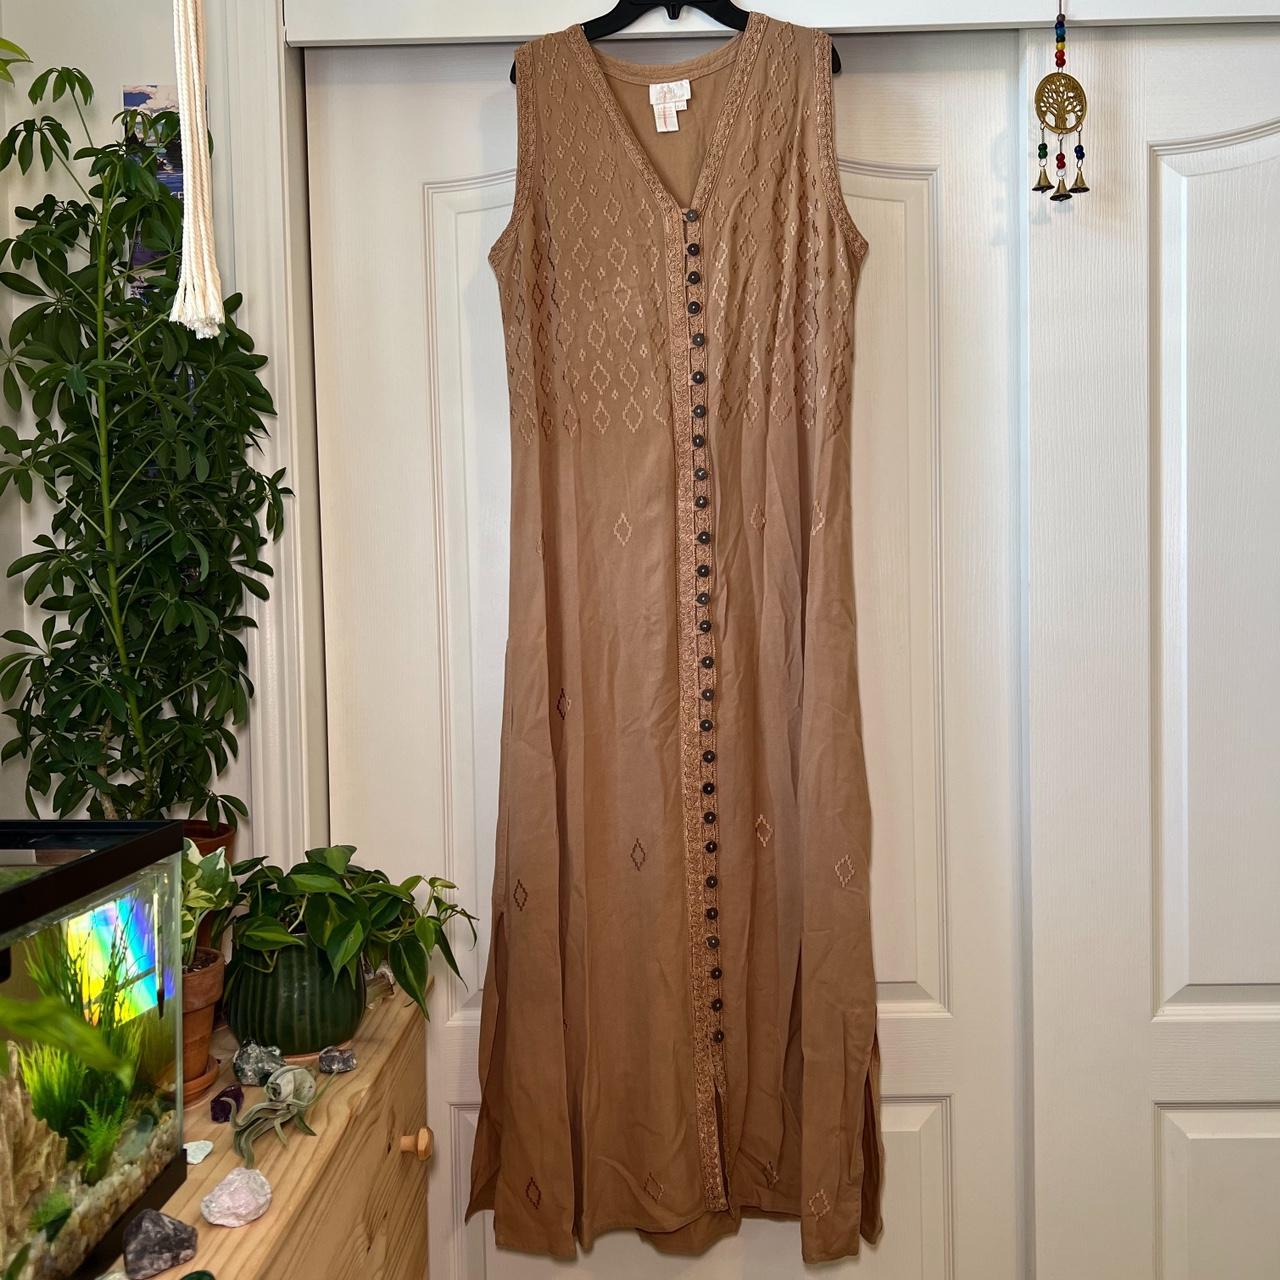 Soft Surroundings Women's Tan and Brown Dress | Depop